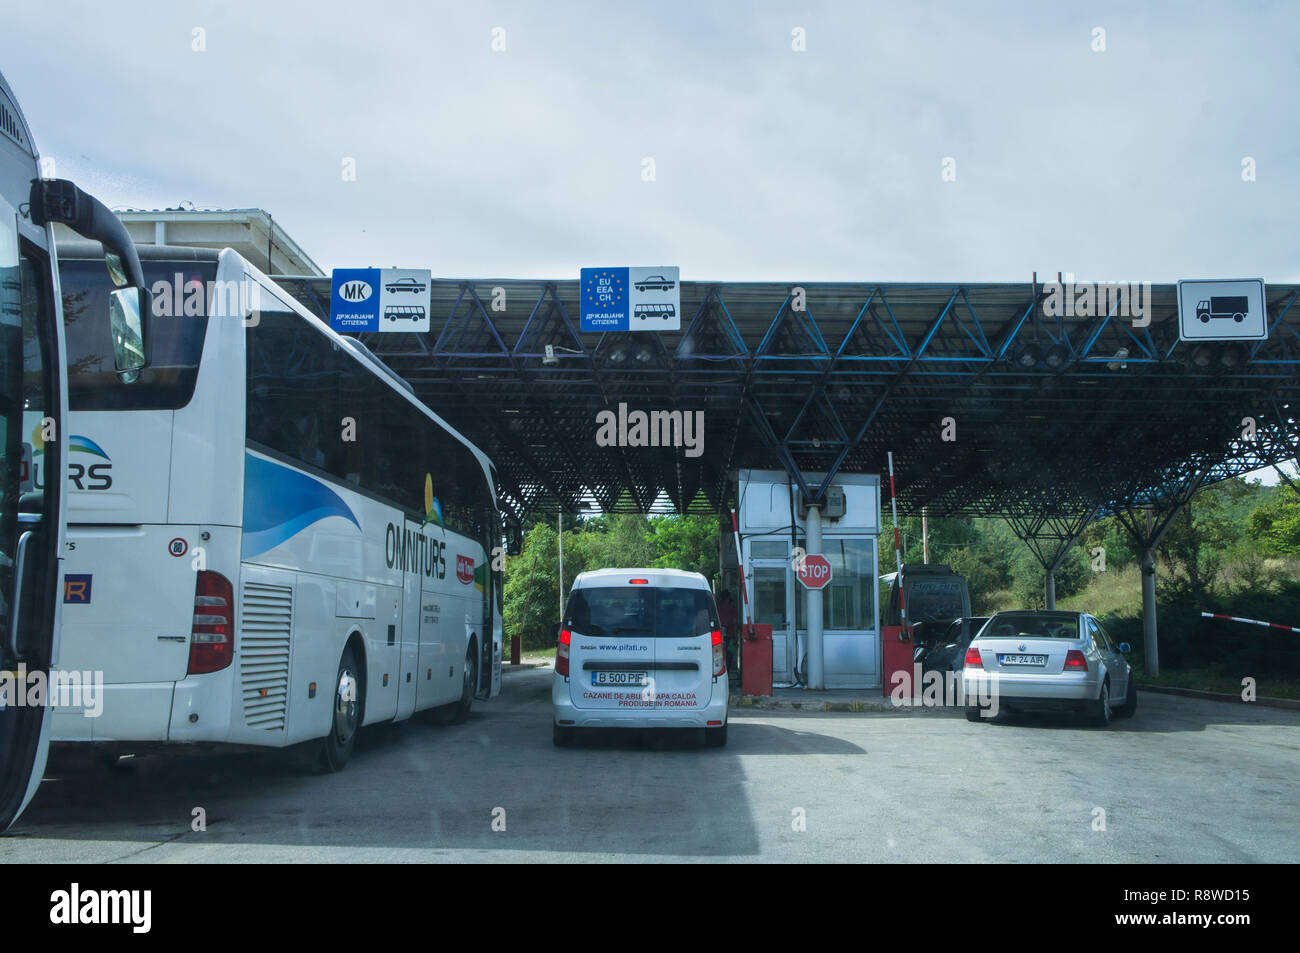 Kjafasan/Qafe Thane border crossing, Macedonia - Albania, MK-ALB, September 5, 2018. (CTK Photo/Libor Sojka) Stock Photo